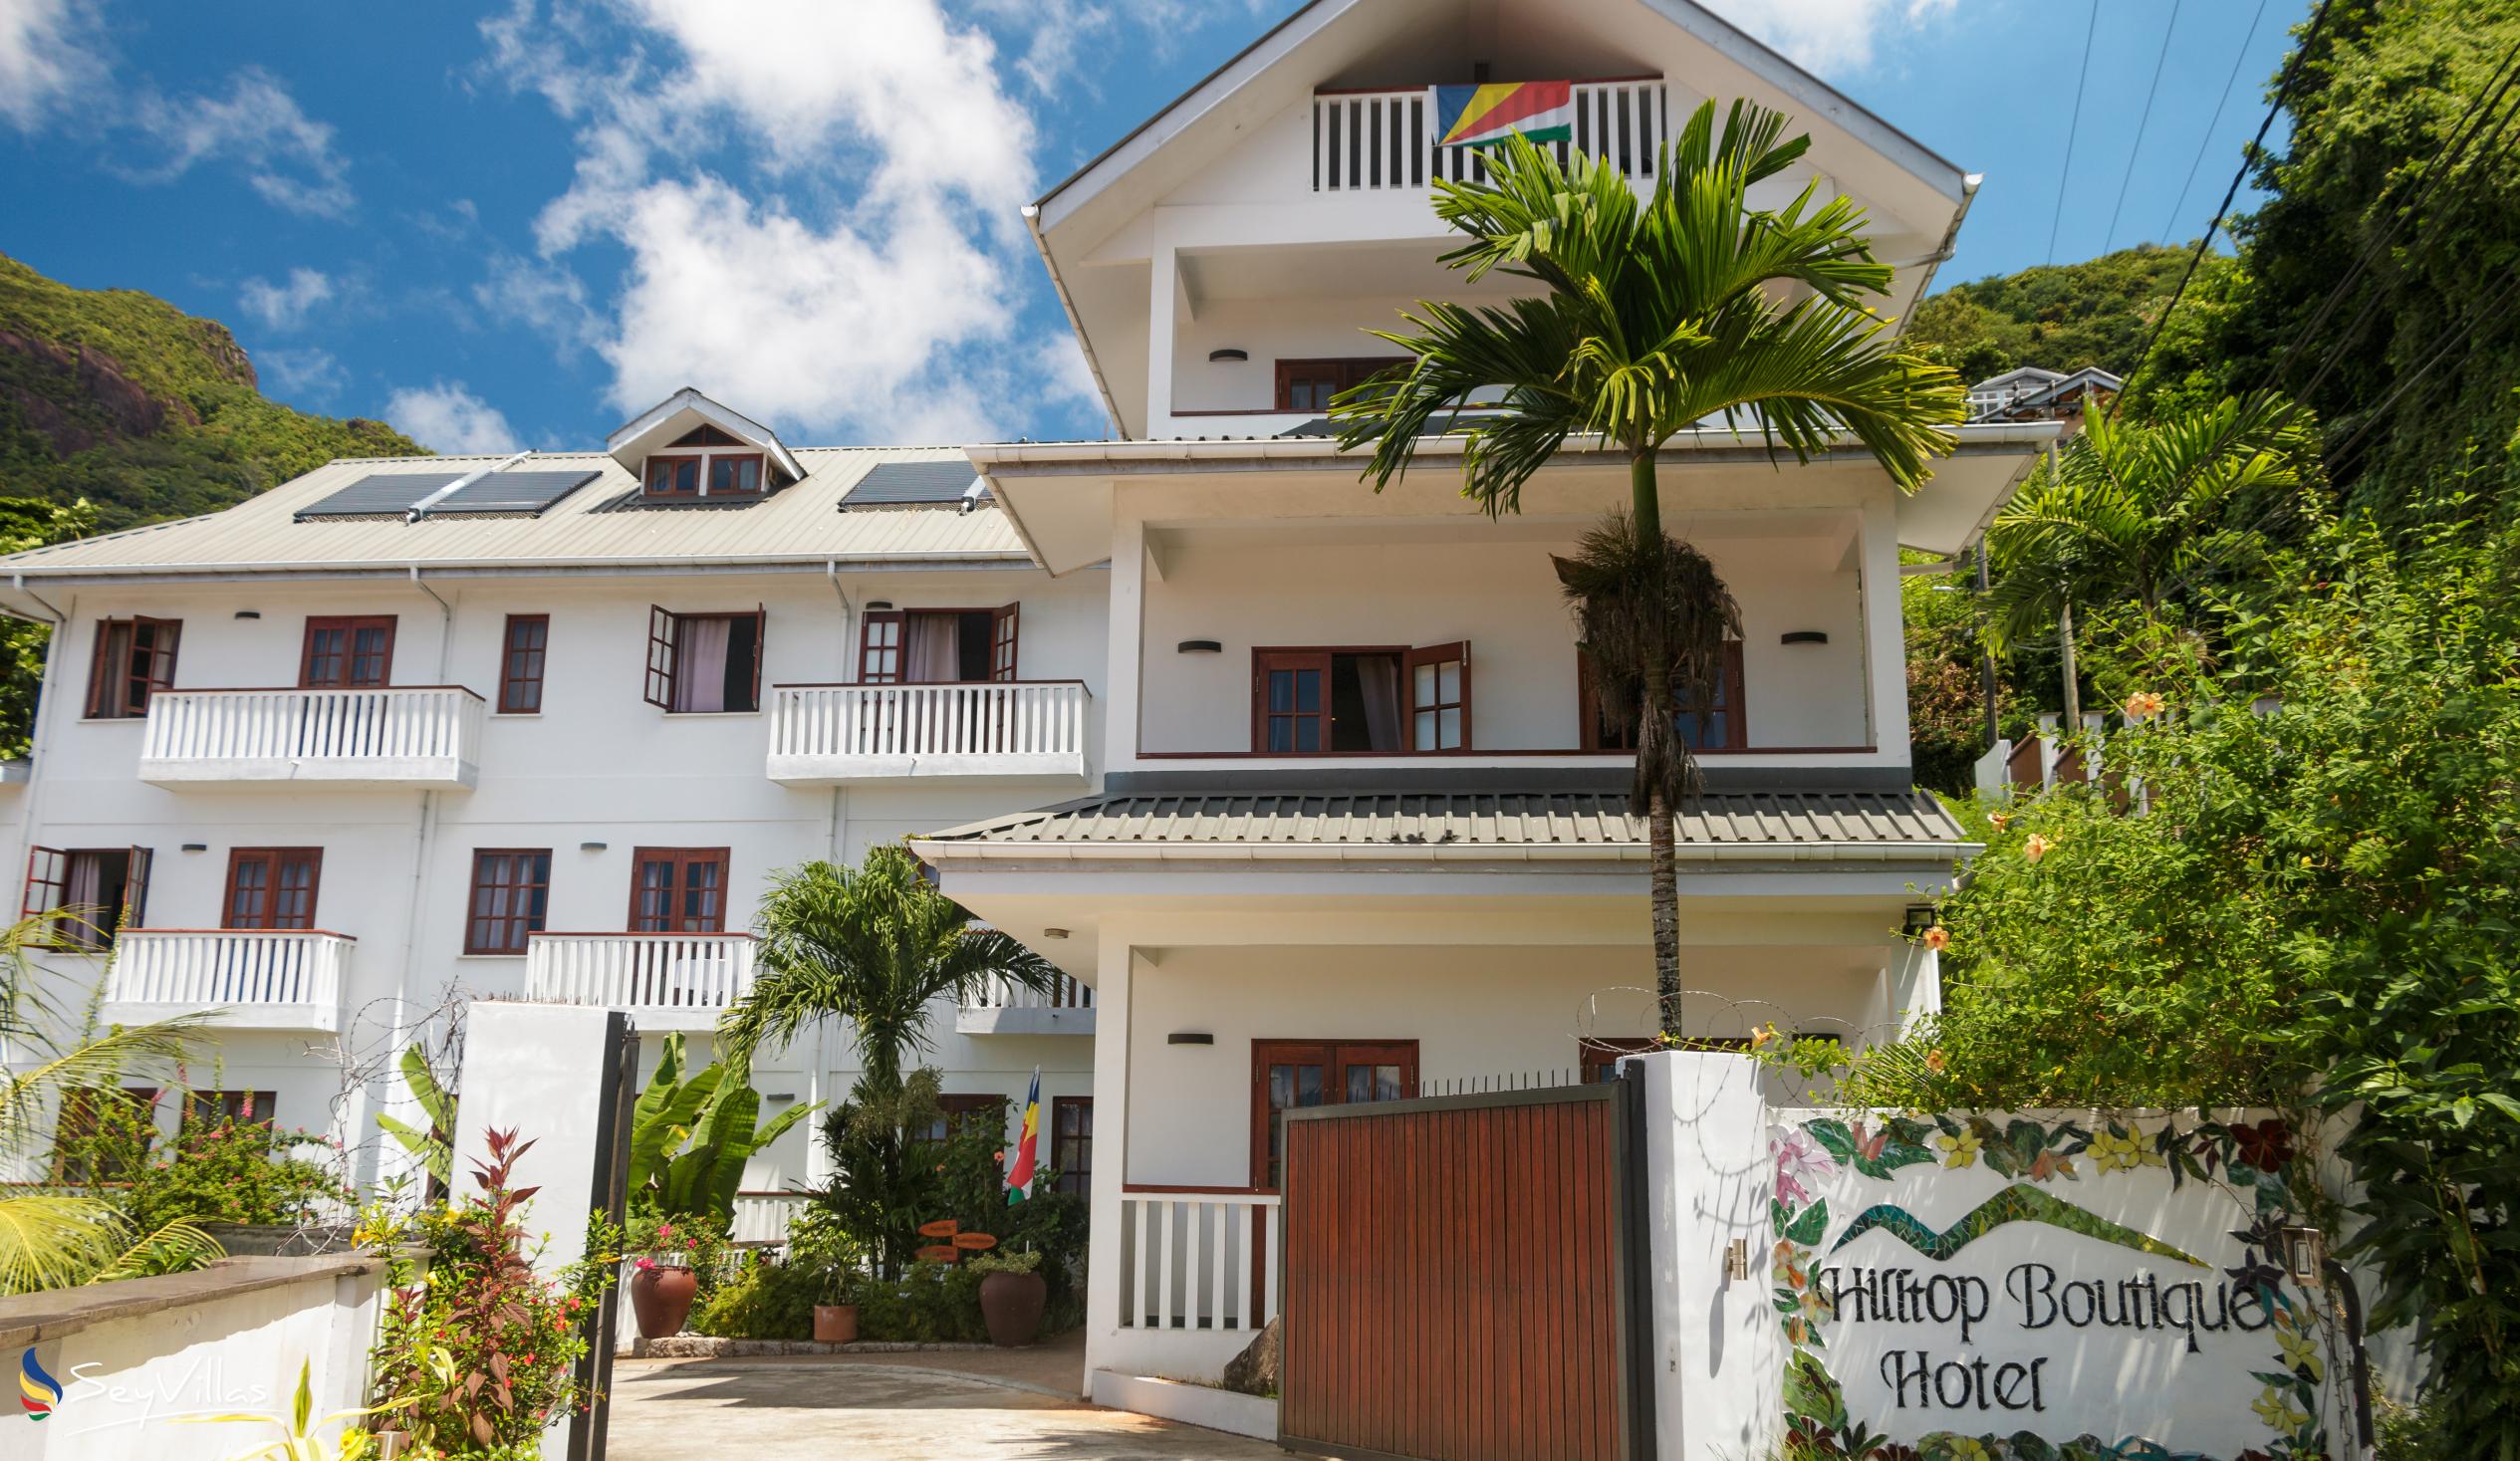 Foto 5: Hilltop Boutique Hotel - Aussenbereich - Mahé (Seychellen)